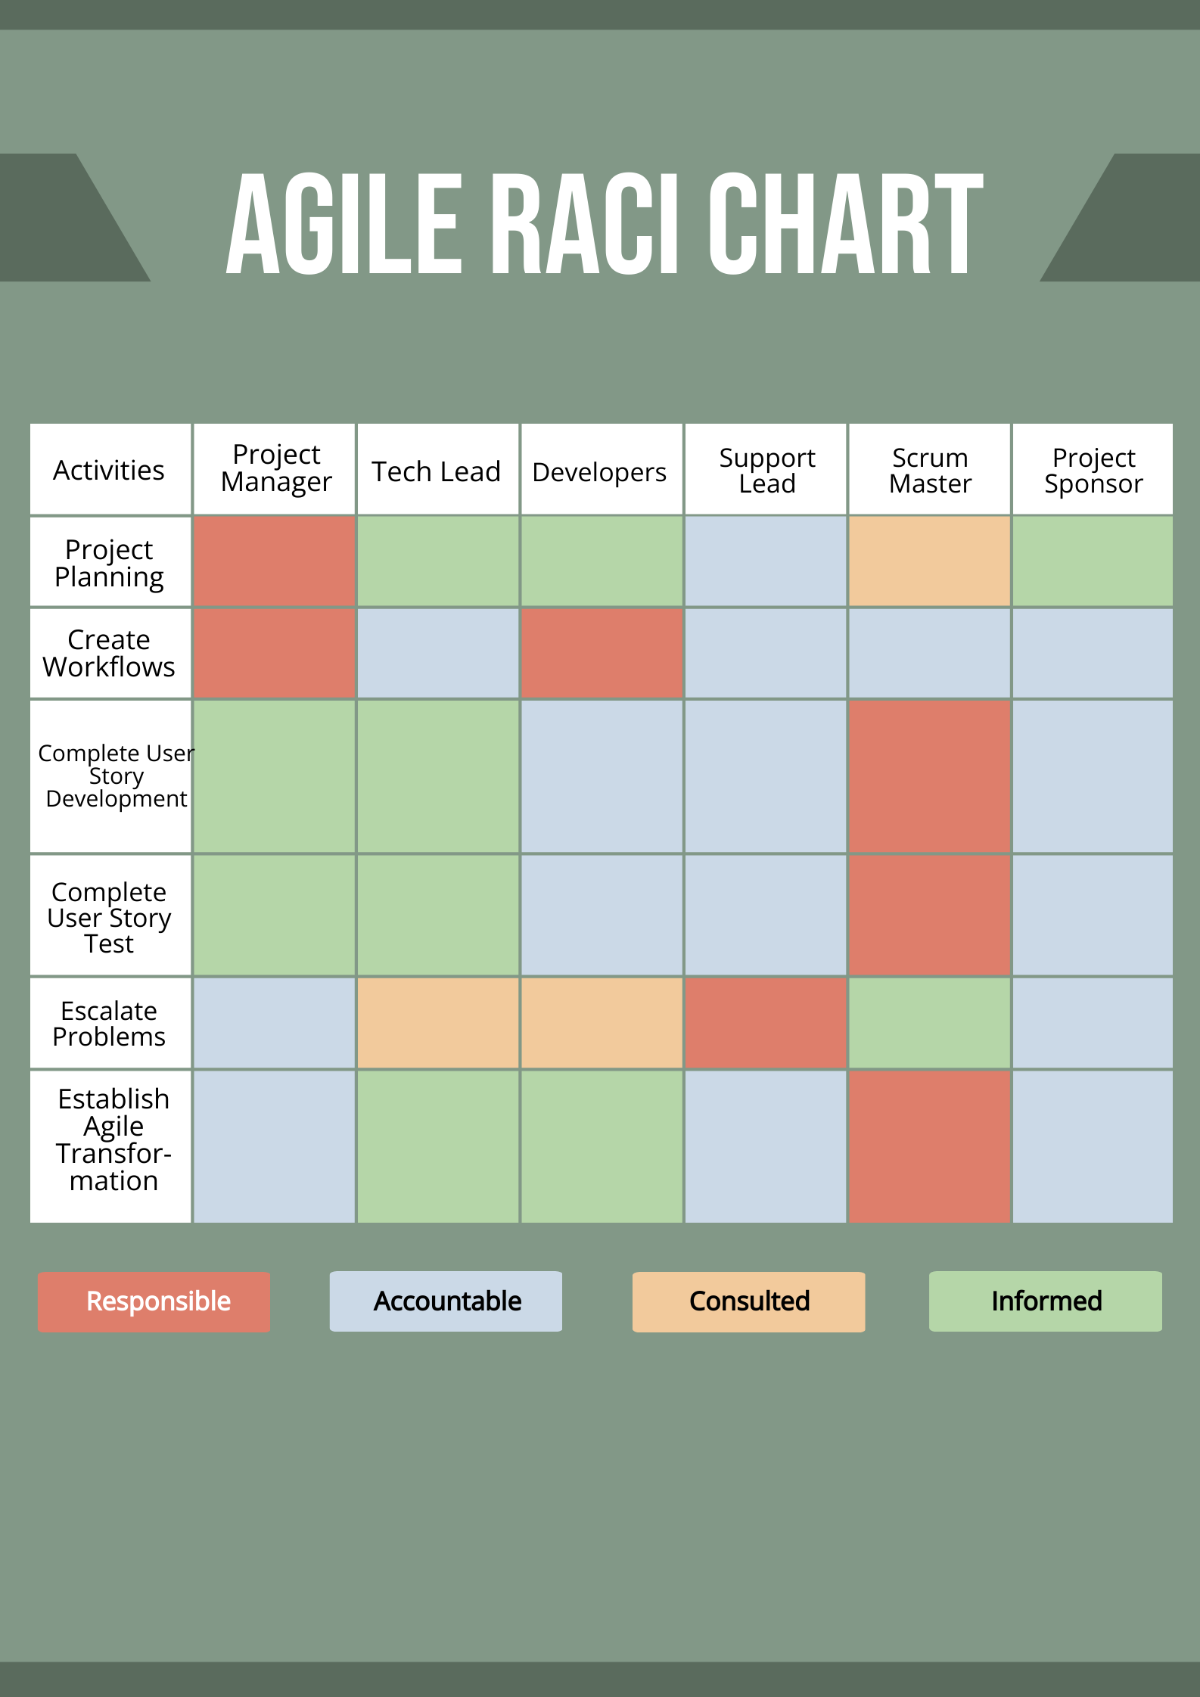 Agile RACI Chart Template